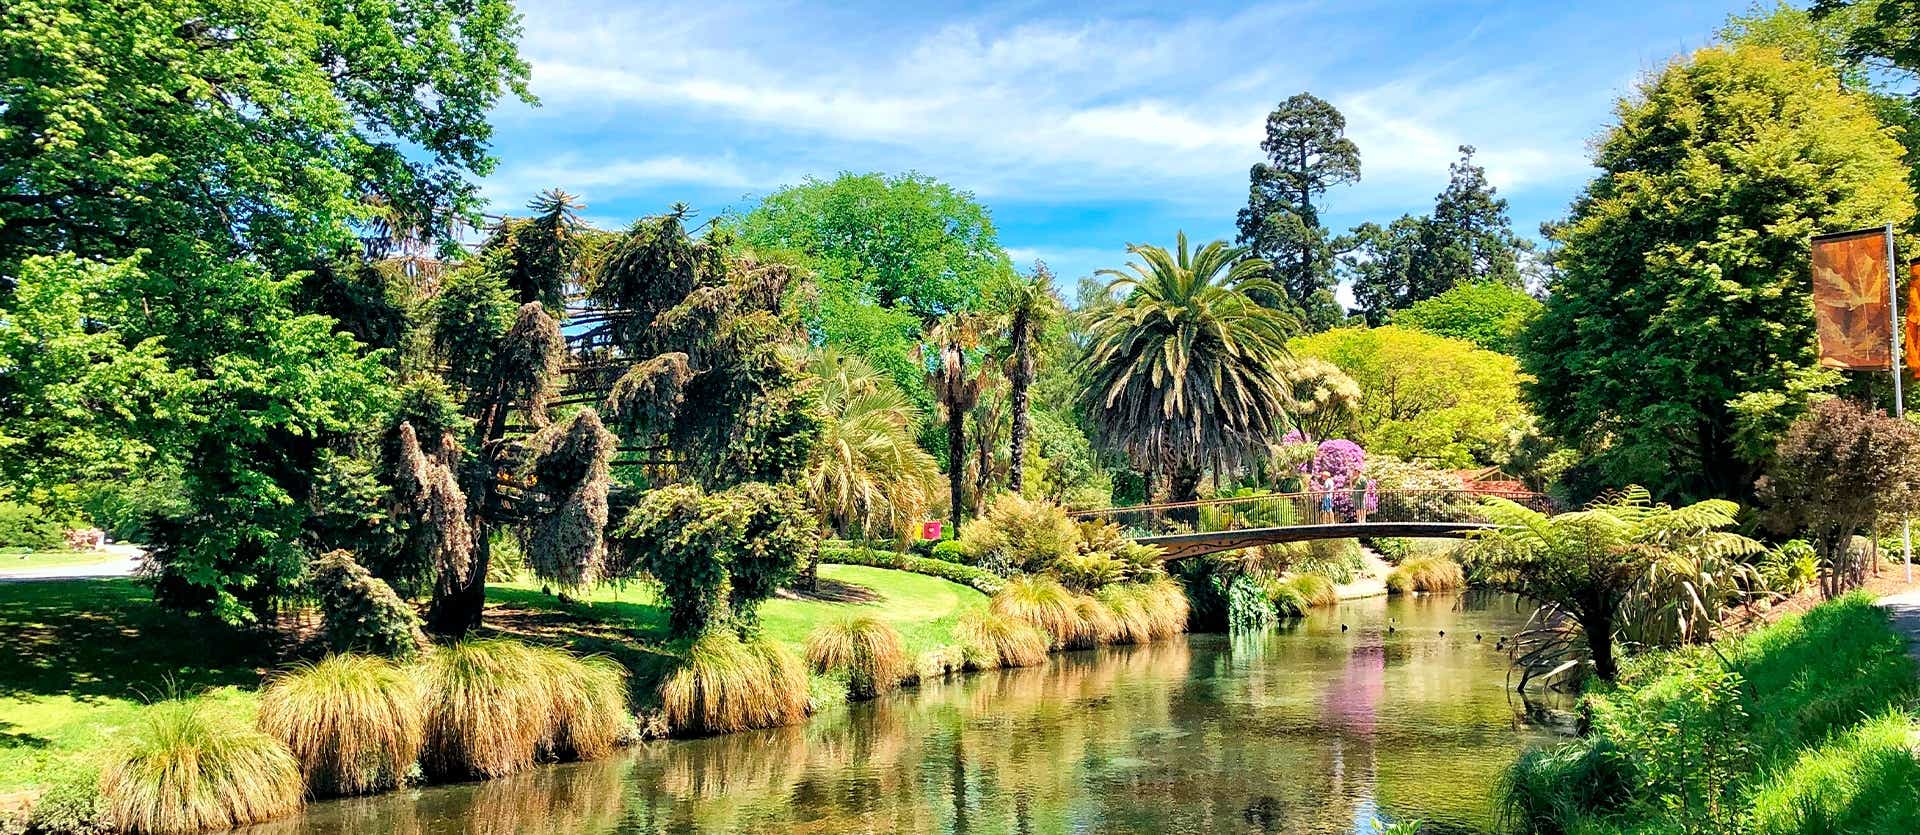 Botanic Gardens <span class="iconos separador"></span> Christchurch 